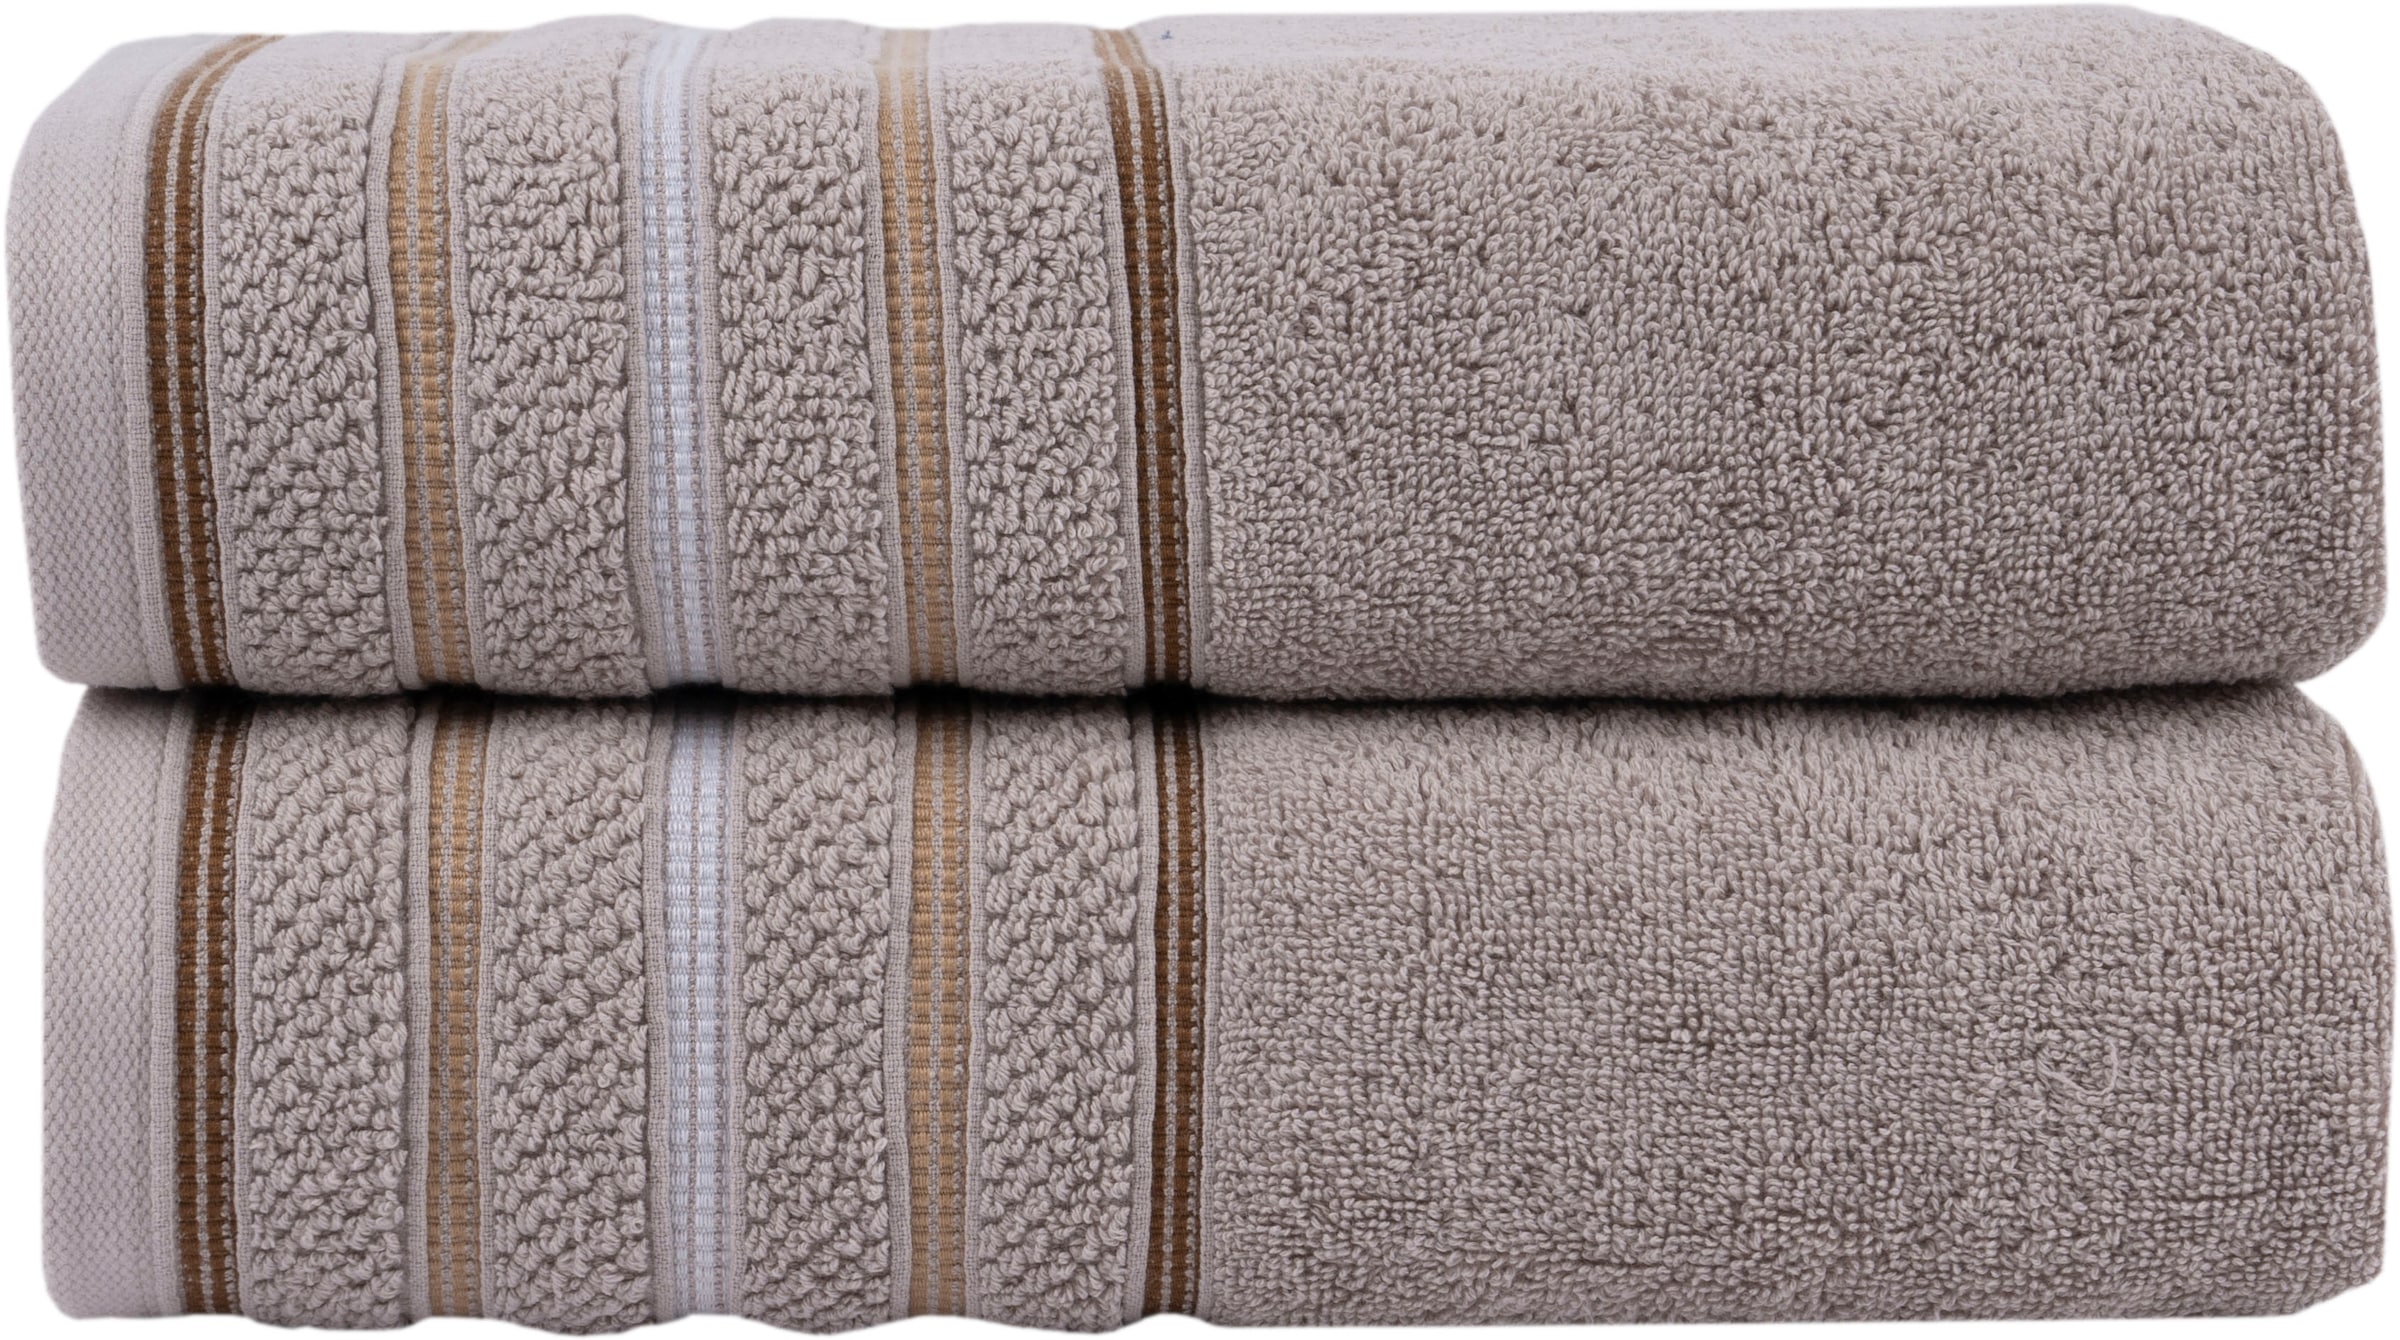 Home affaire Handtuch Handtücher Set, 4 Premium, tlg., 4 Frottier, oder BAUR Handtuch-Set Duschtücher 2 bestellen Bio-Baumwolle, »Safien«, Set 